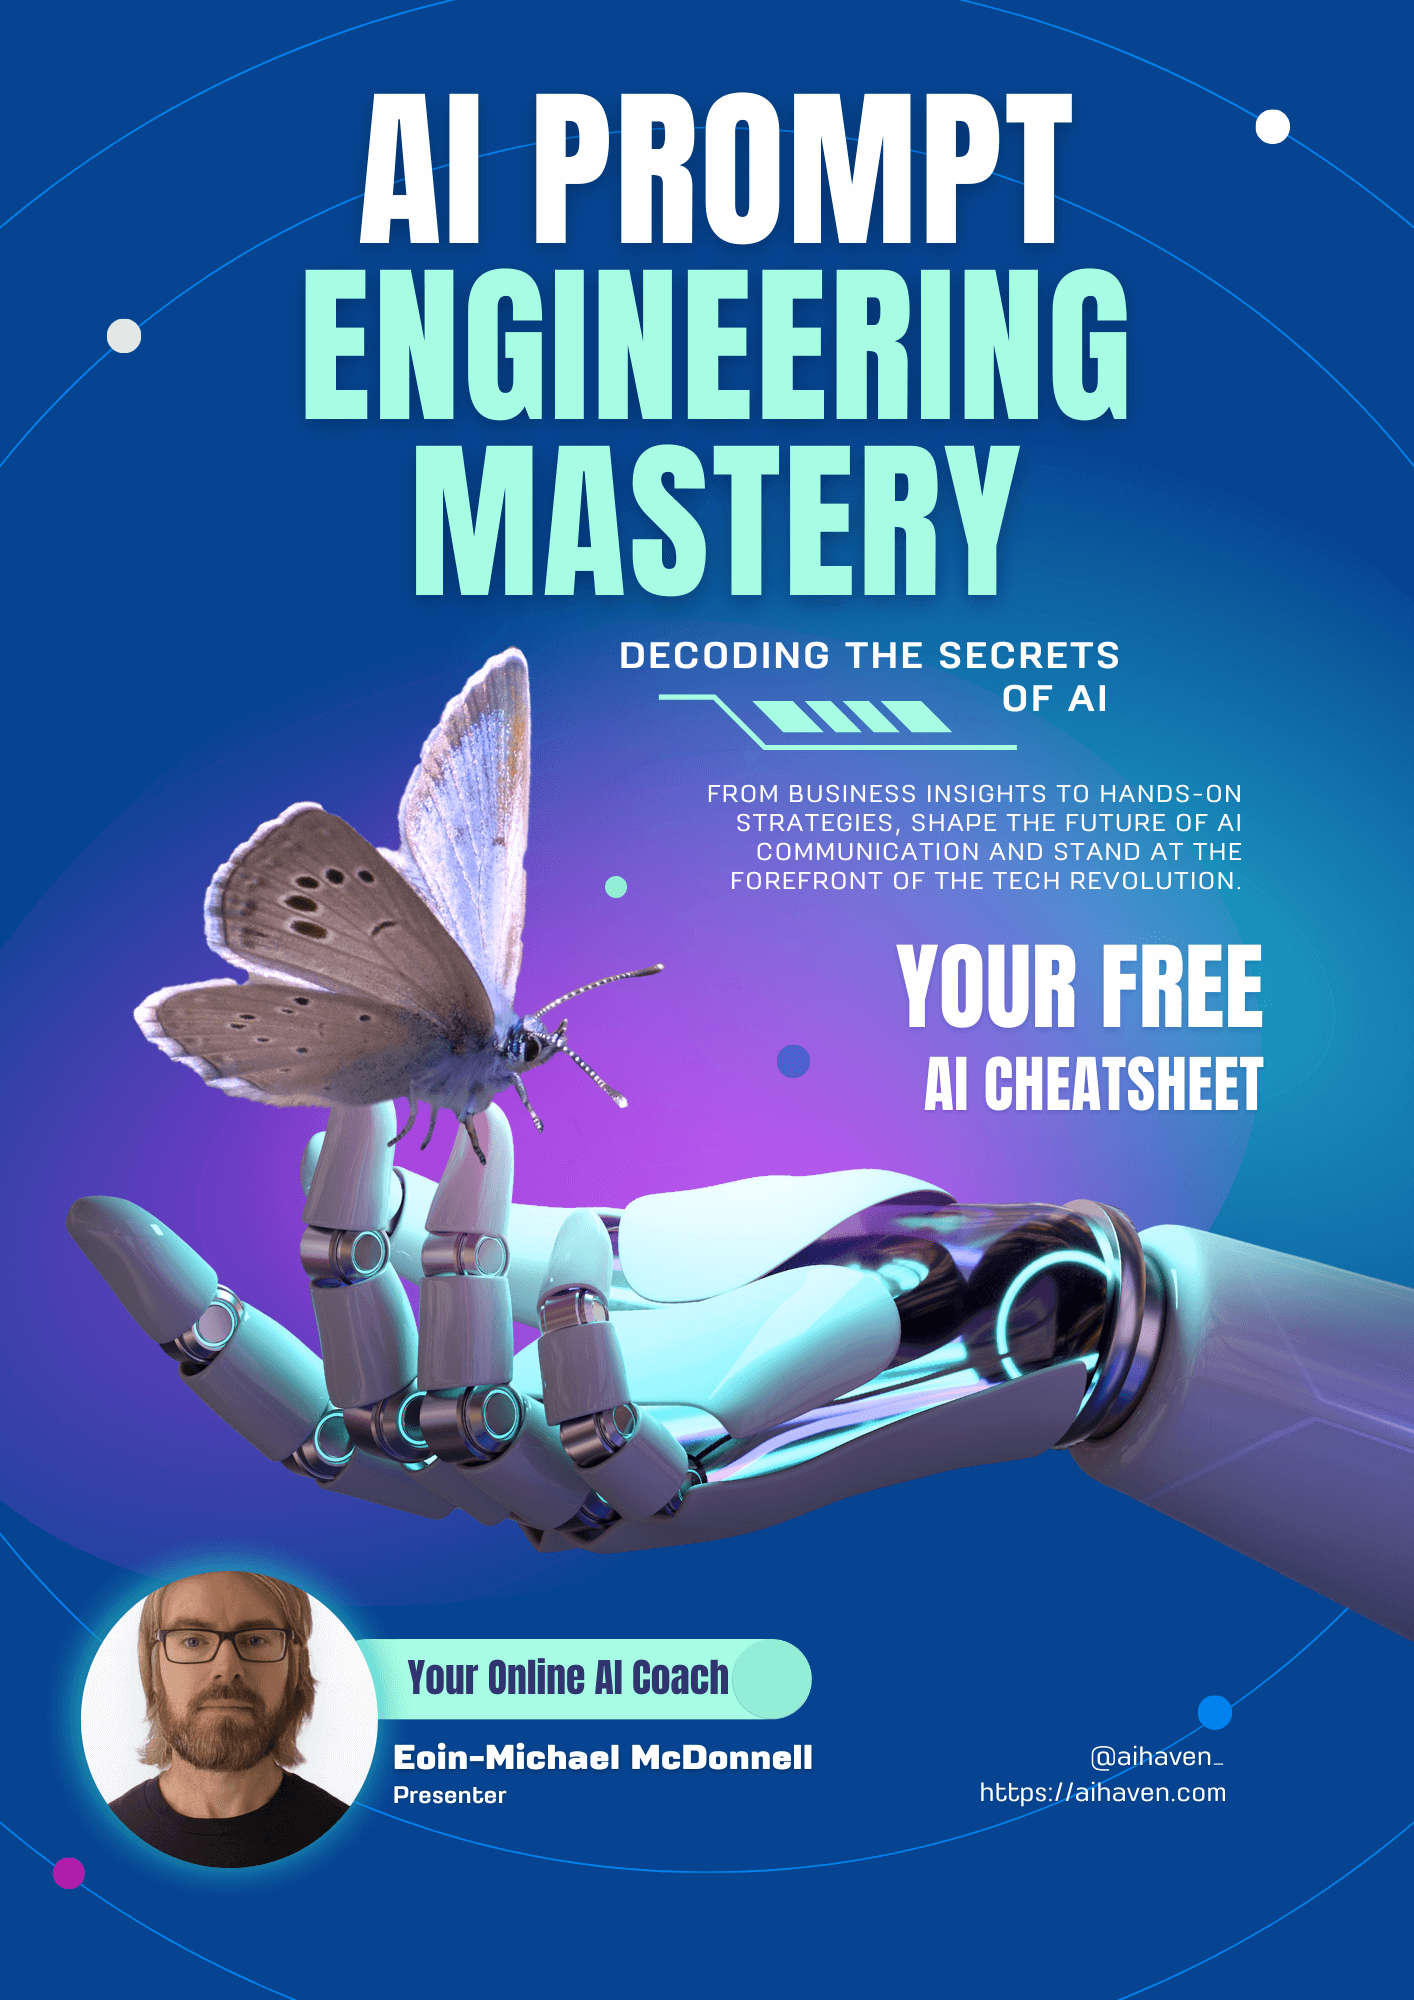 Propmt Engineering eBook